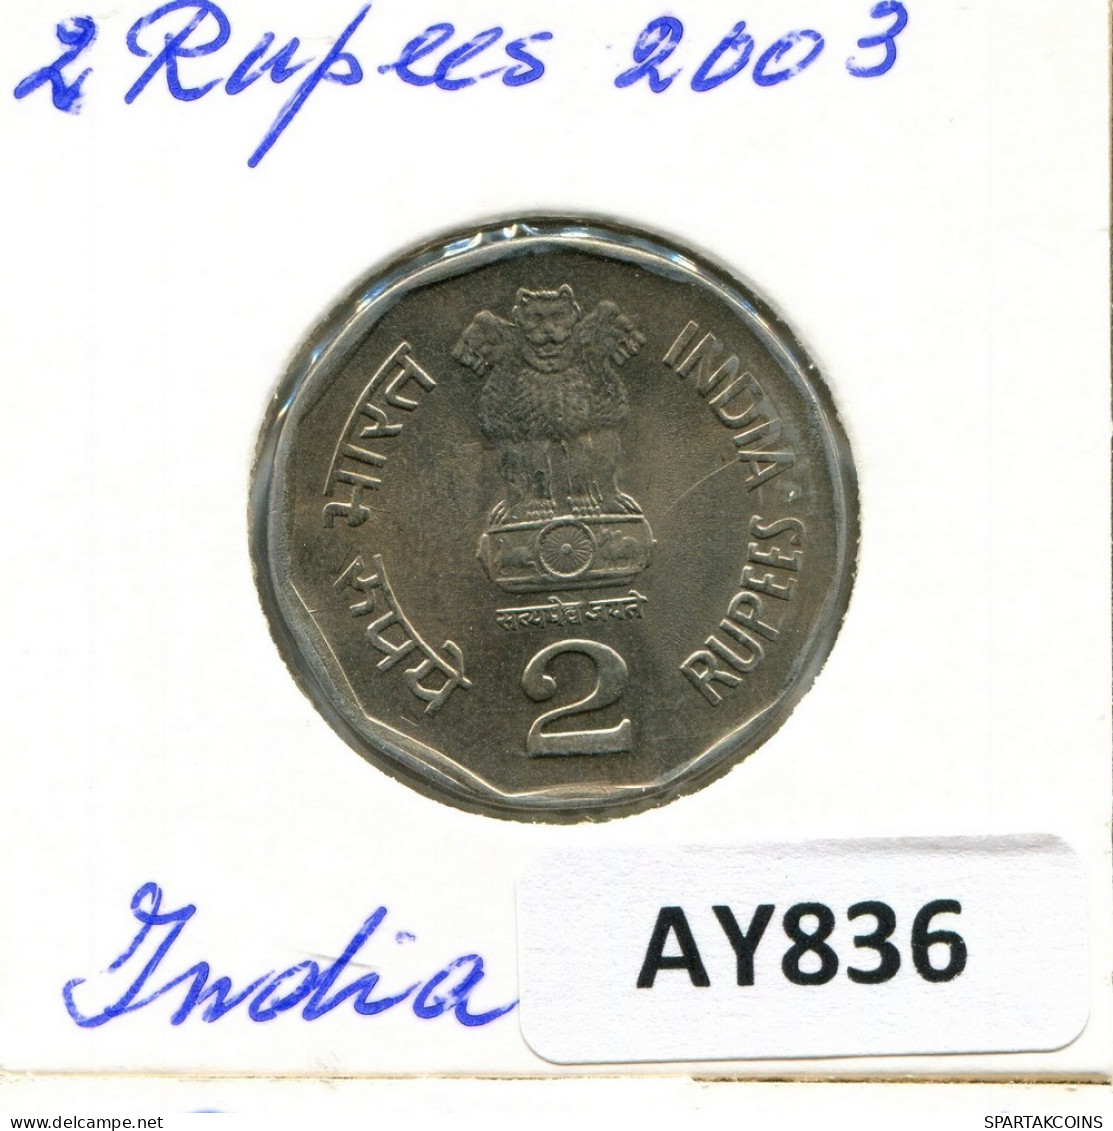 2 RUPEES 2003 INDIEN INDIA Münze #AY836.D.A - Indien